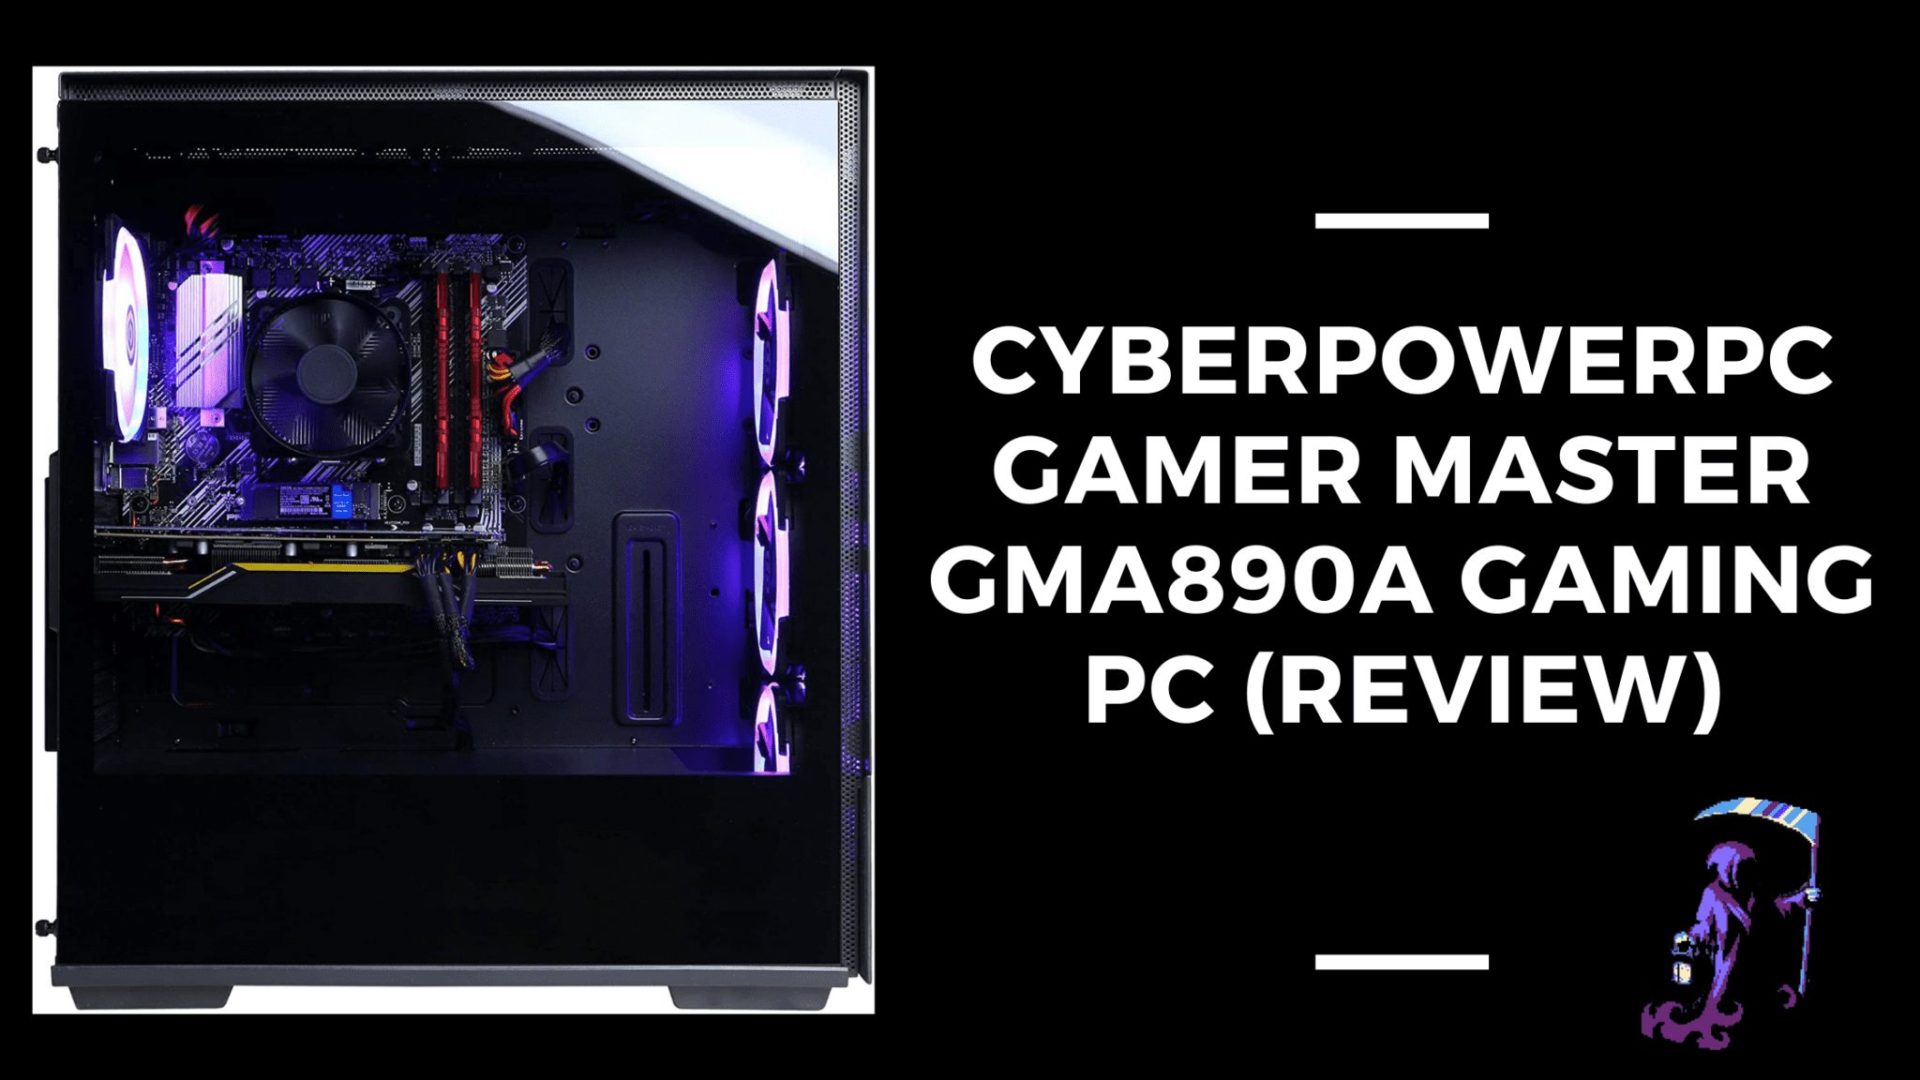 CyberPowerPC - Gamer Master Review